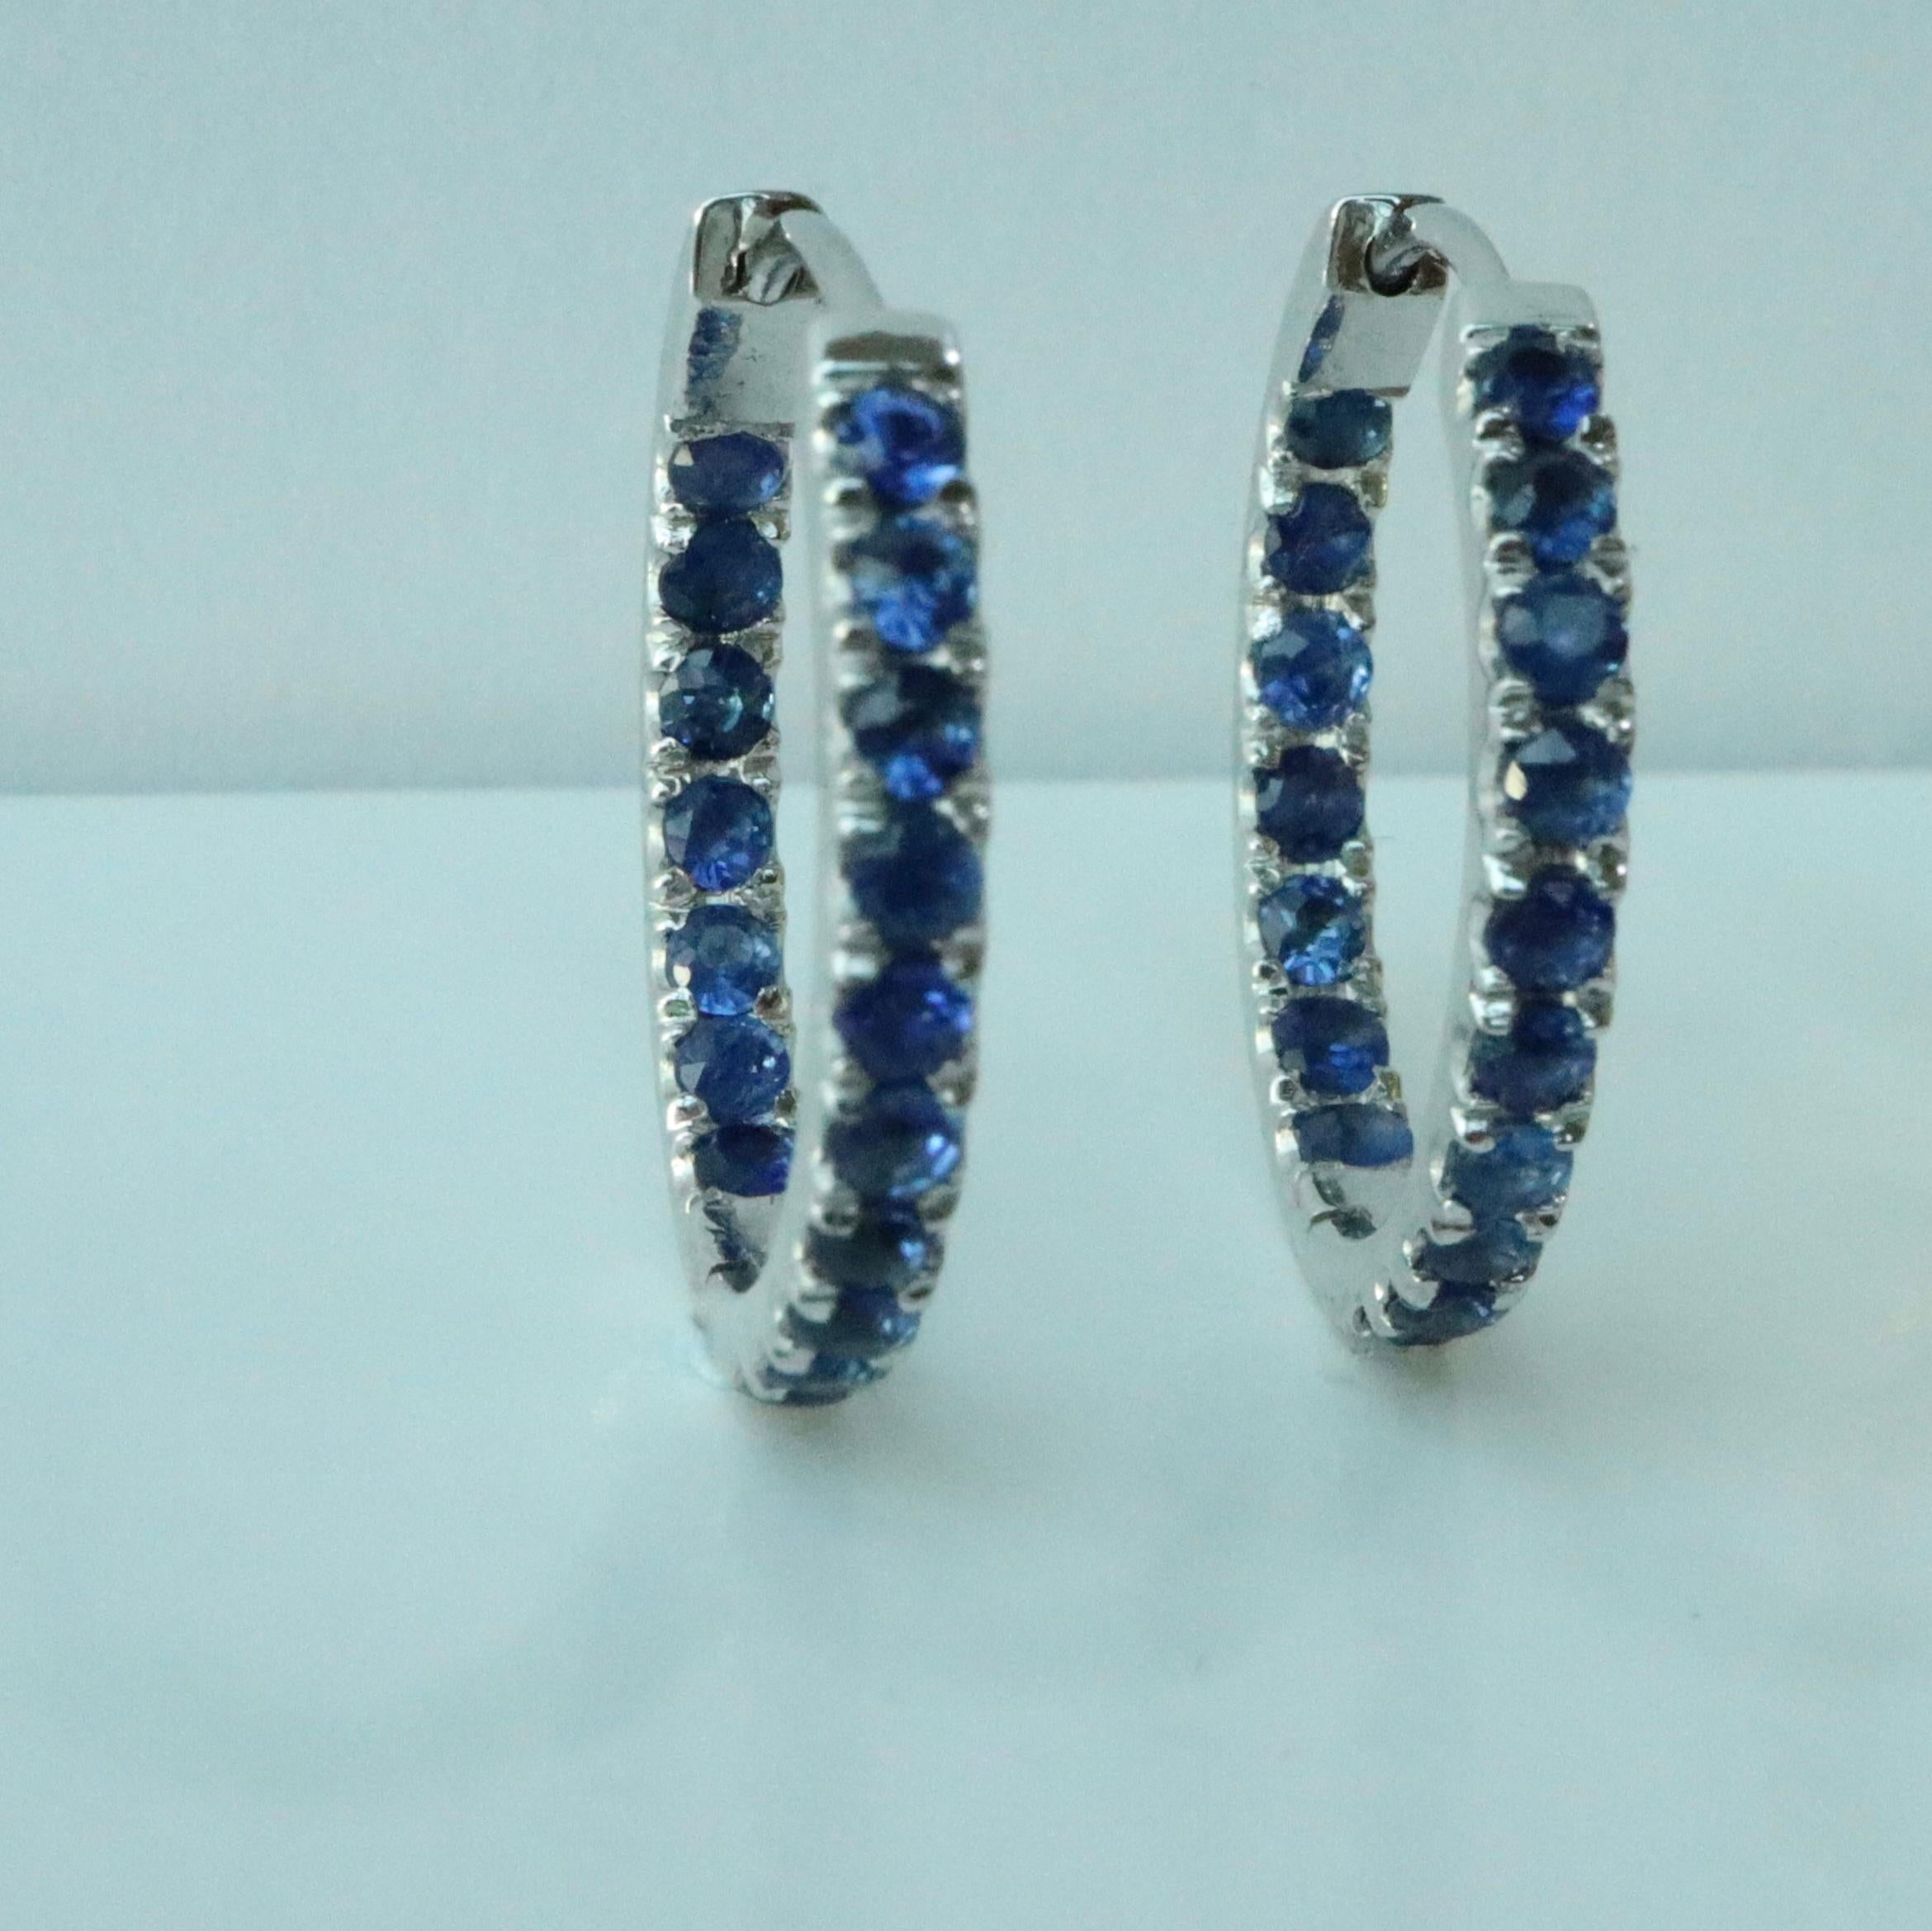 Details :

Main Gemstone (34pcs) - Burmese Unheated sapphire
Measurement (Gemstones)- 2mm
Total Carat Weight (34pcs) - Ct
Color: Blue
Cut - Round Brilliant Cut
Treatment - None (No Heated, No Treated, No Enhanced)
Origin - Mogok (Burma,